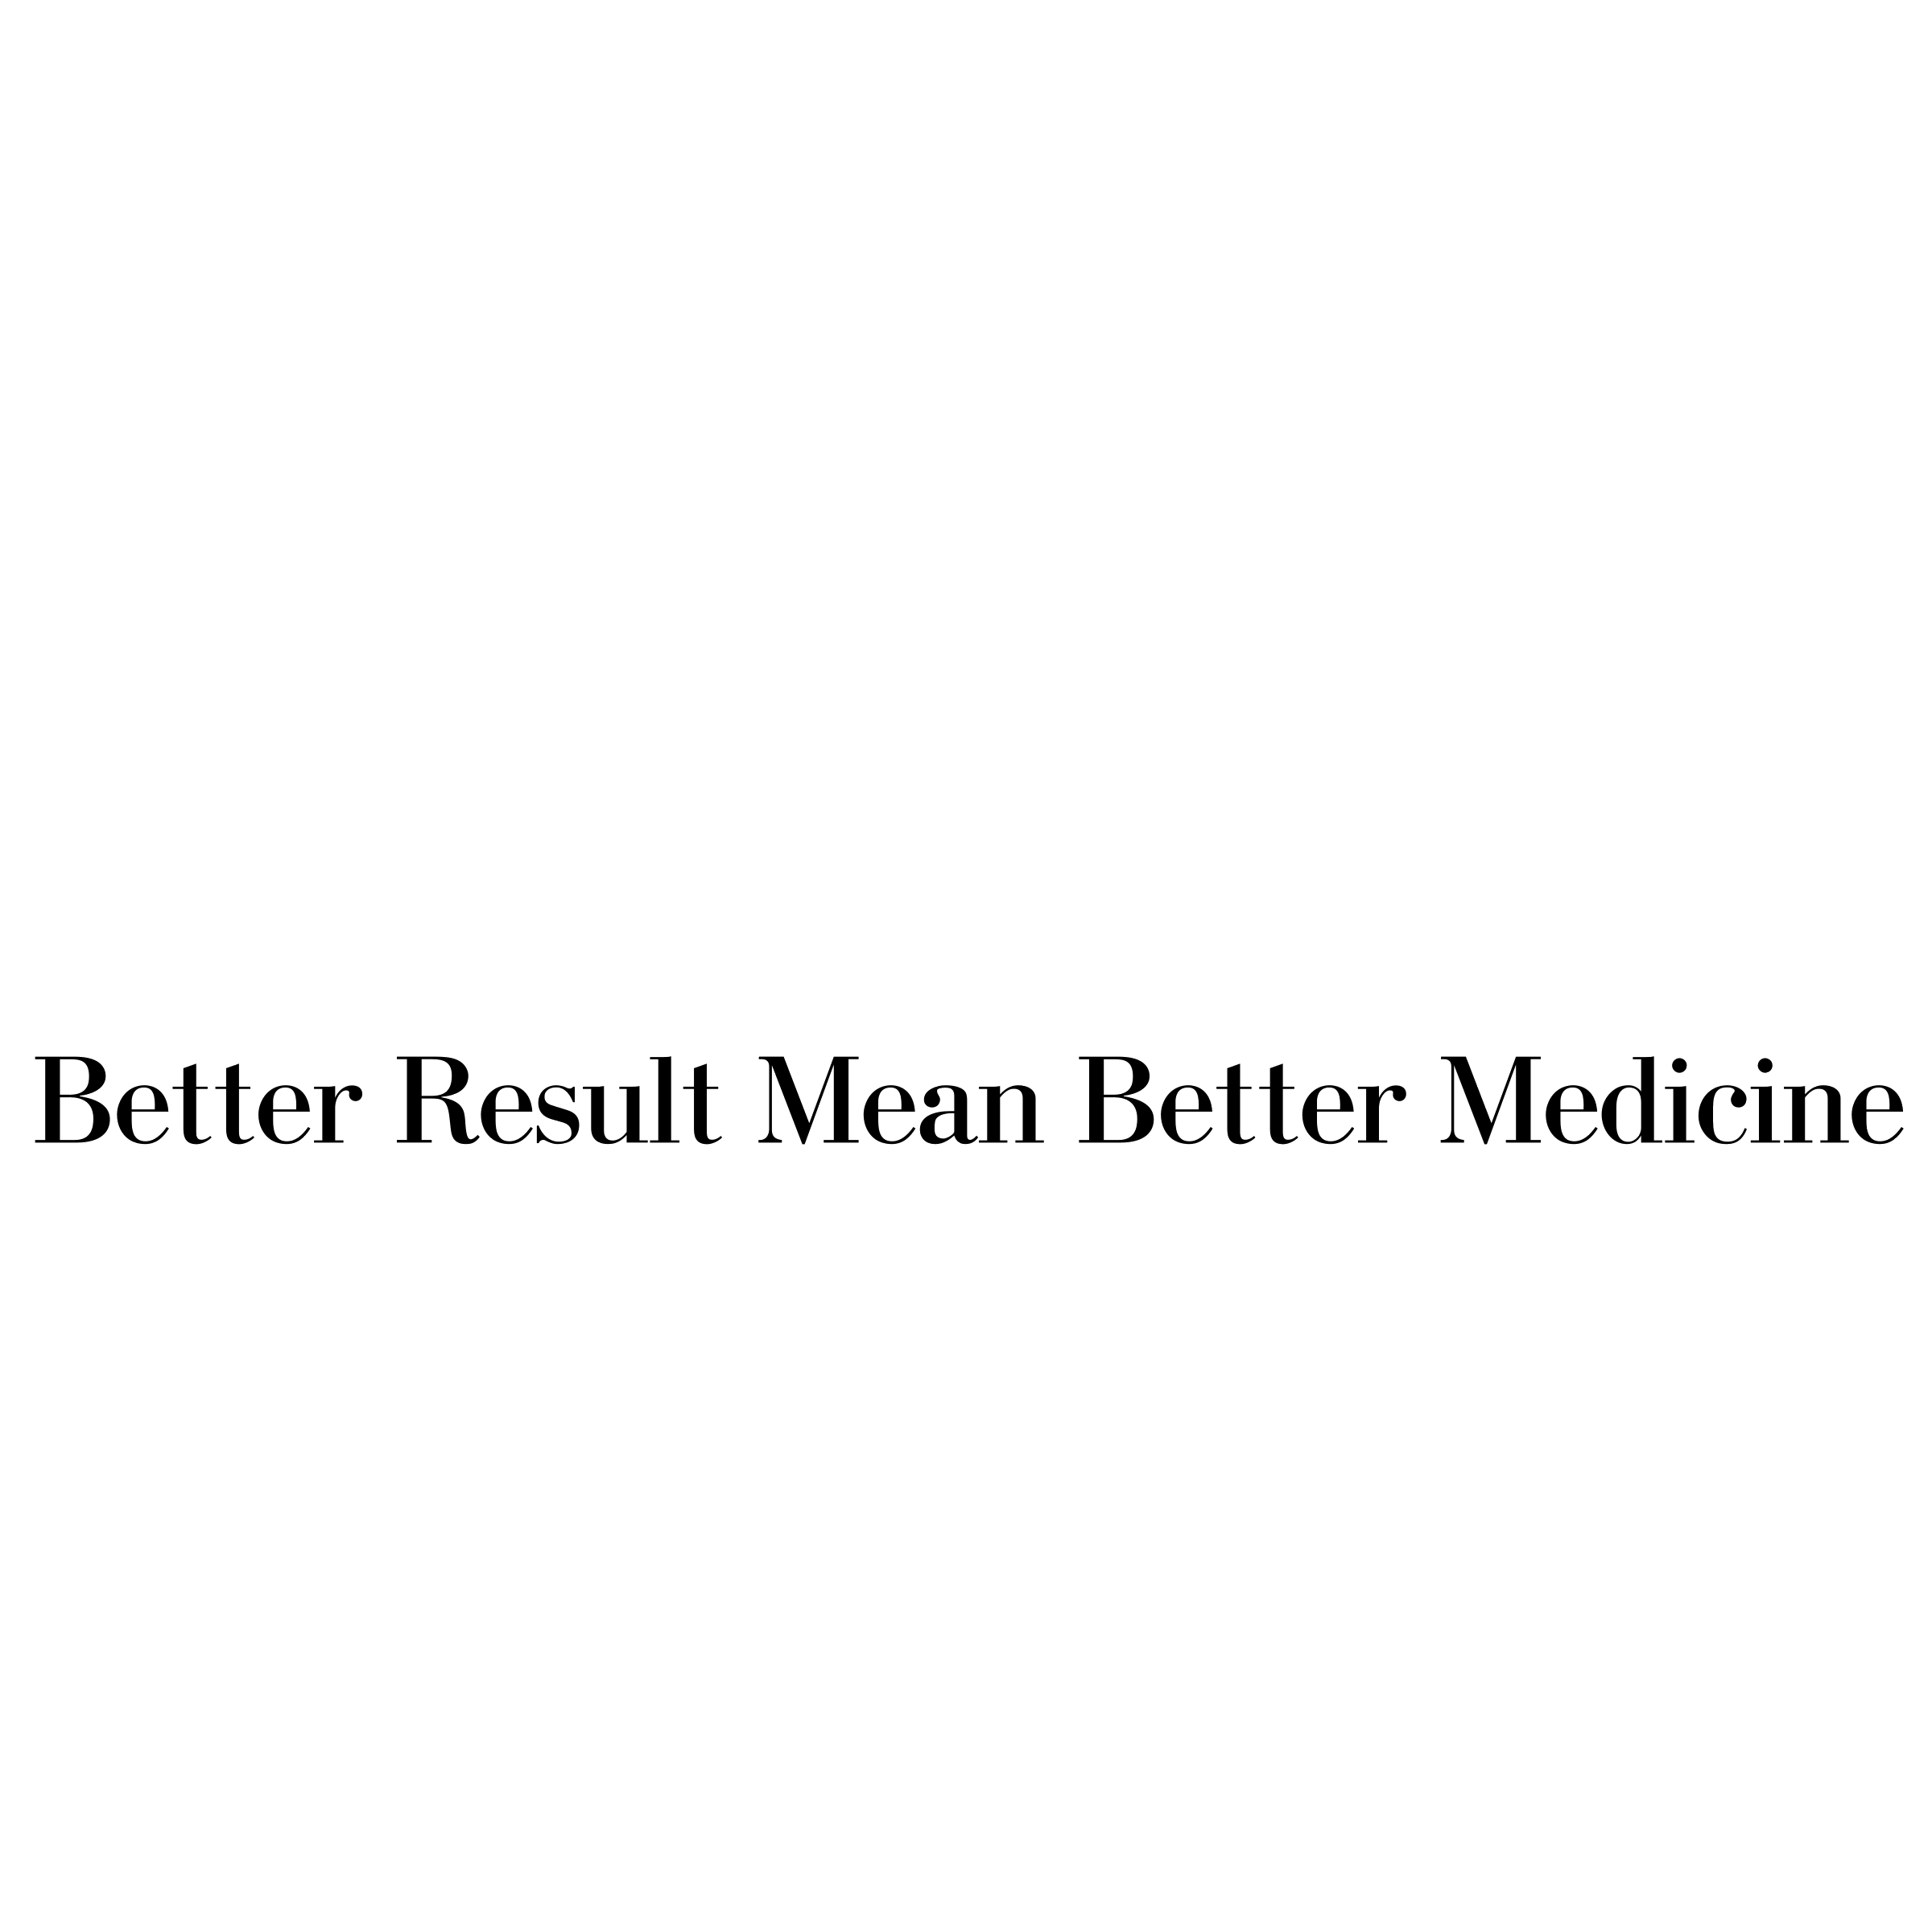 Biostar Logo - Biostar Logo PNG Transparent & SVG Vector - Freebie Supply